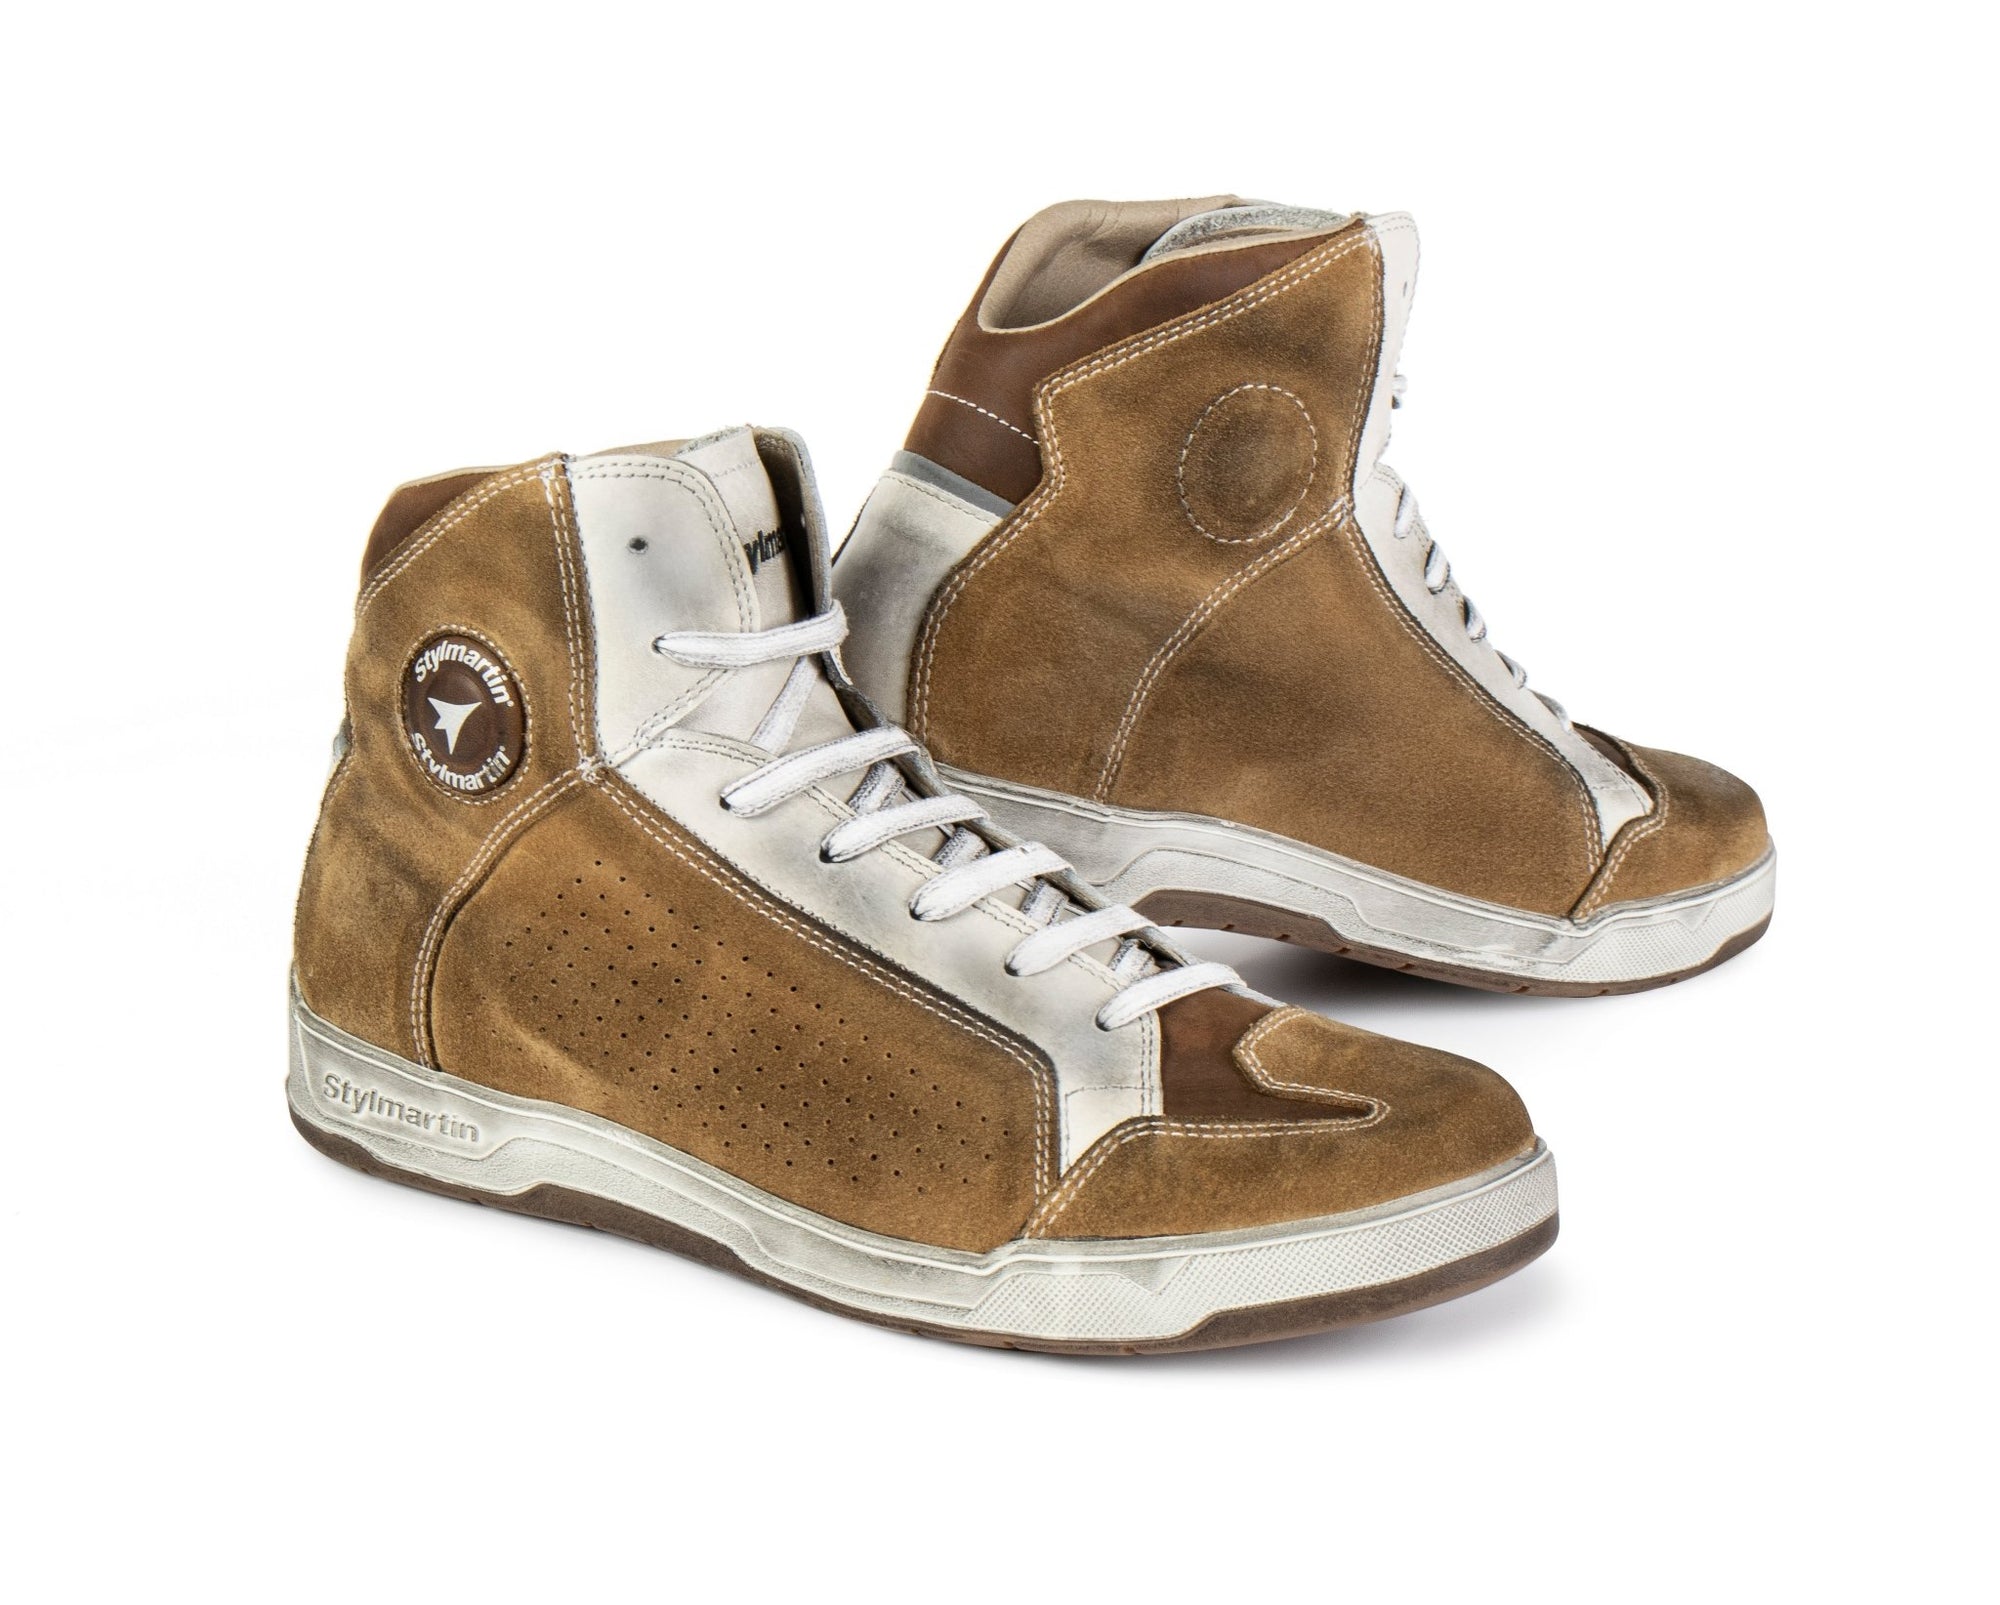 Stylmartin - Stylmartin Colorado Sneaker in Cognac - Boots - Salt Flats Clothing